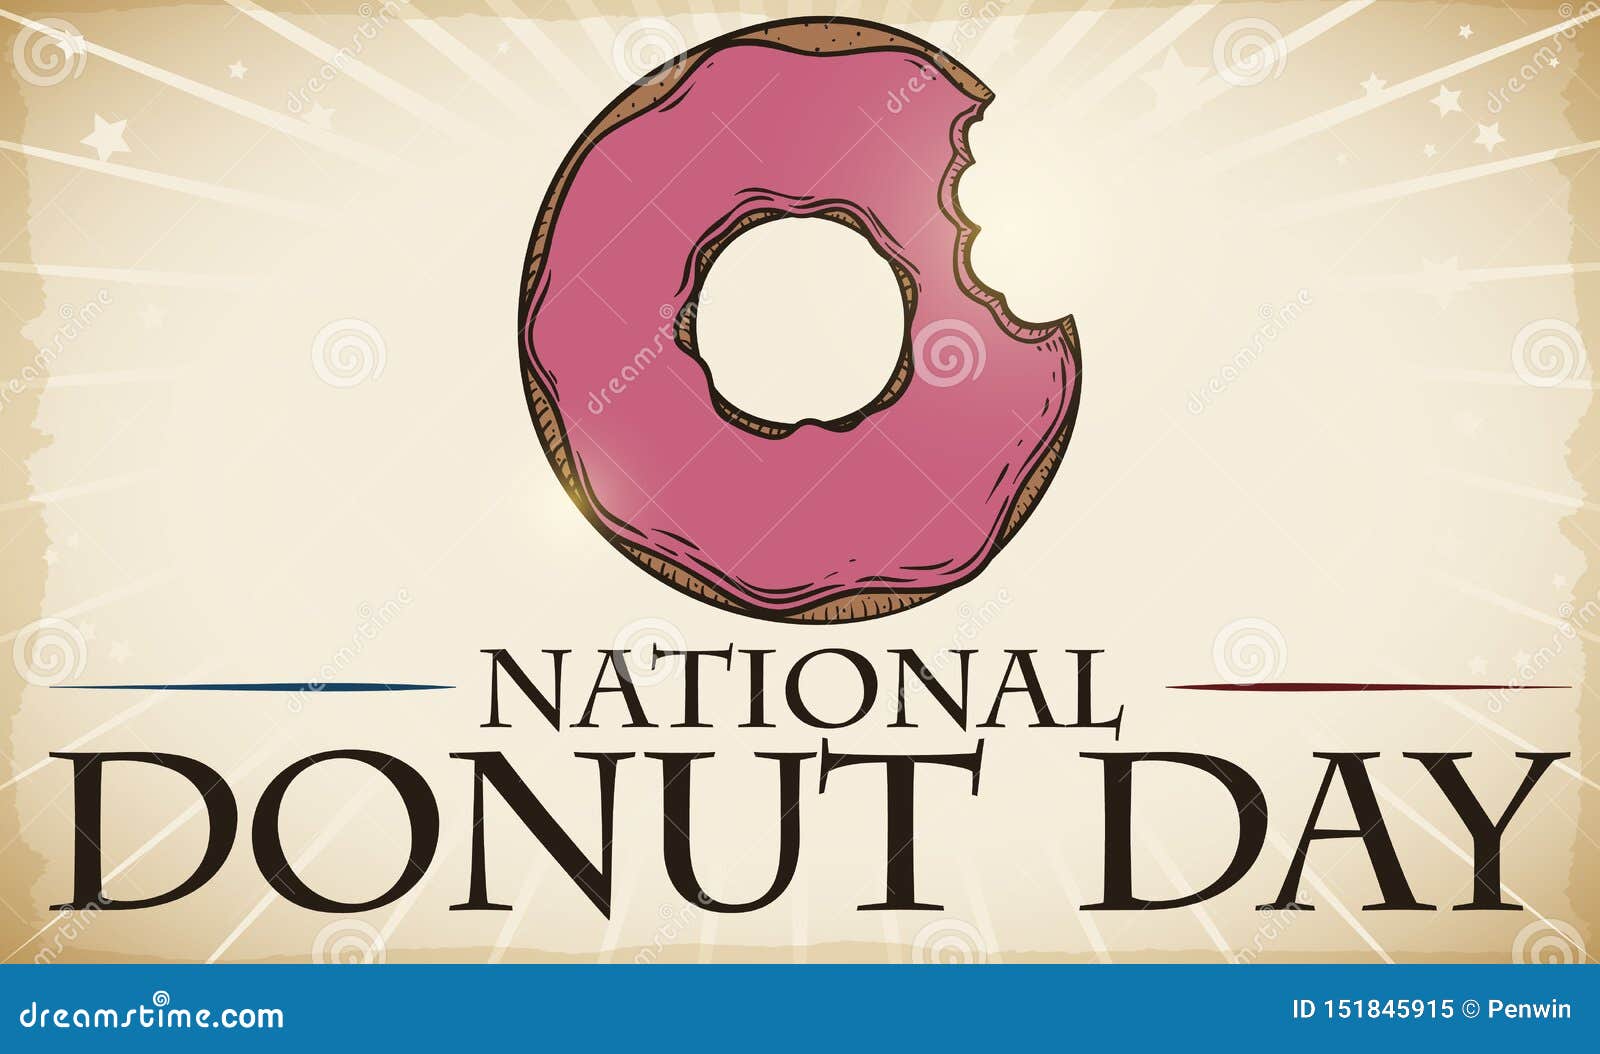 Half Bitten Doughnut Draw To Celebrate National Donut Day Vector Illustration Stock Vector